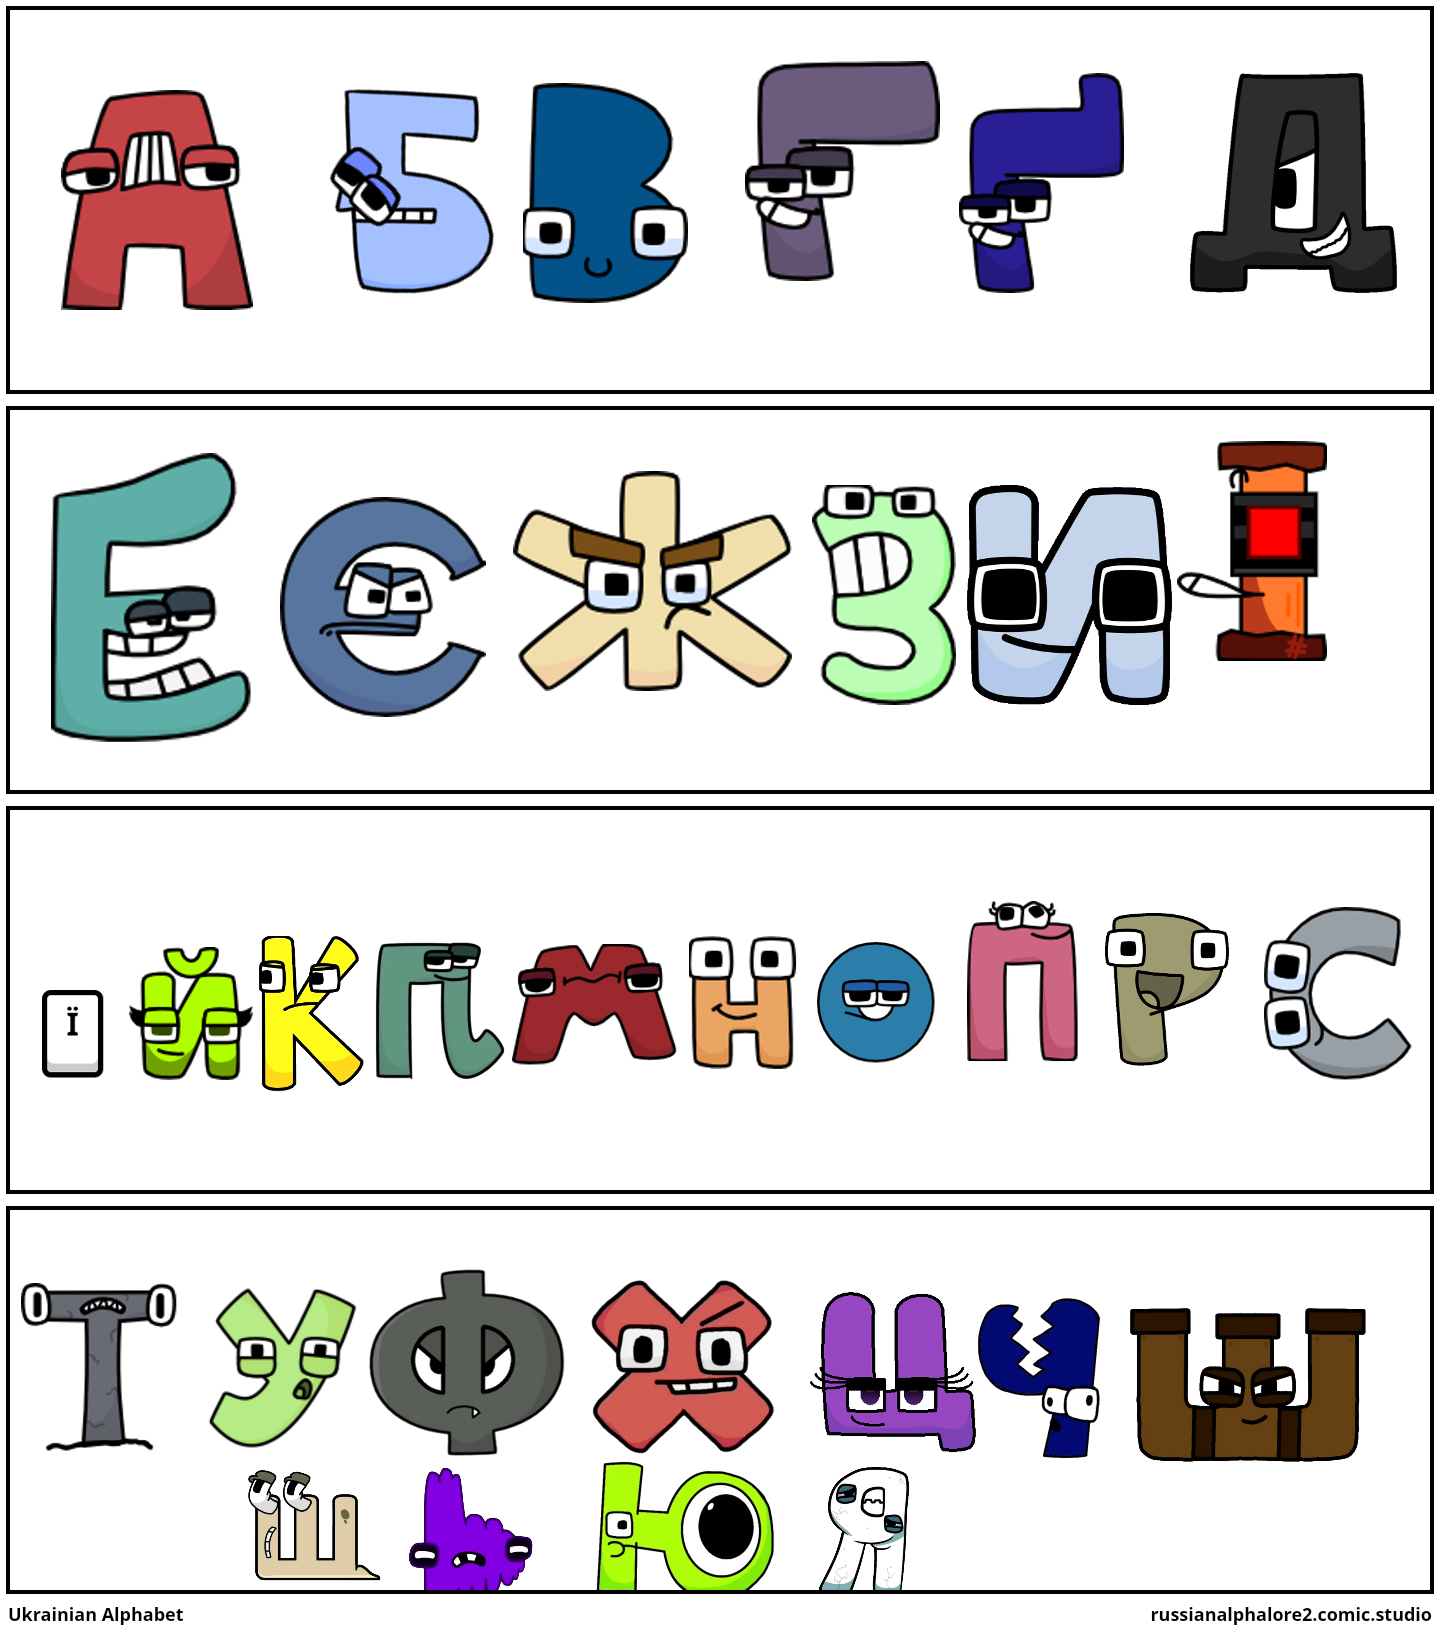 Best Ukrainian alphabet lore - Comic Studio